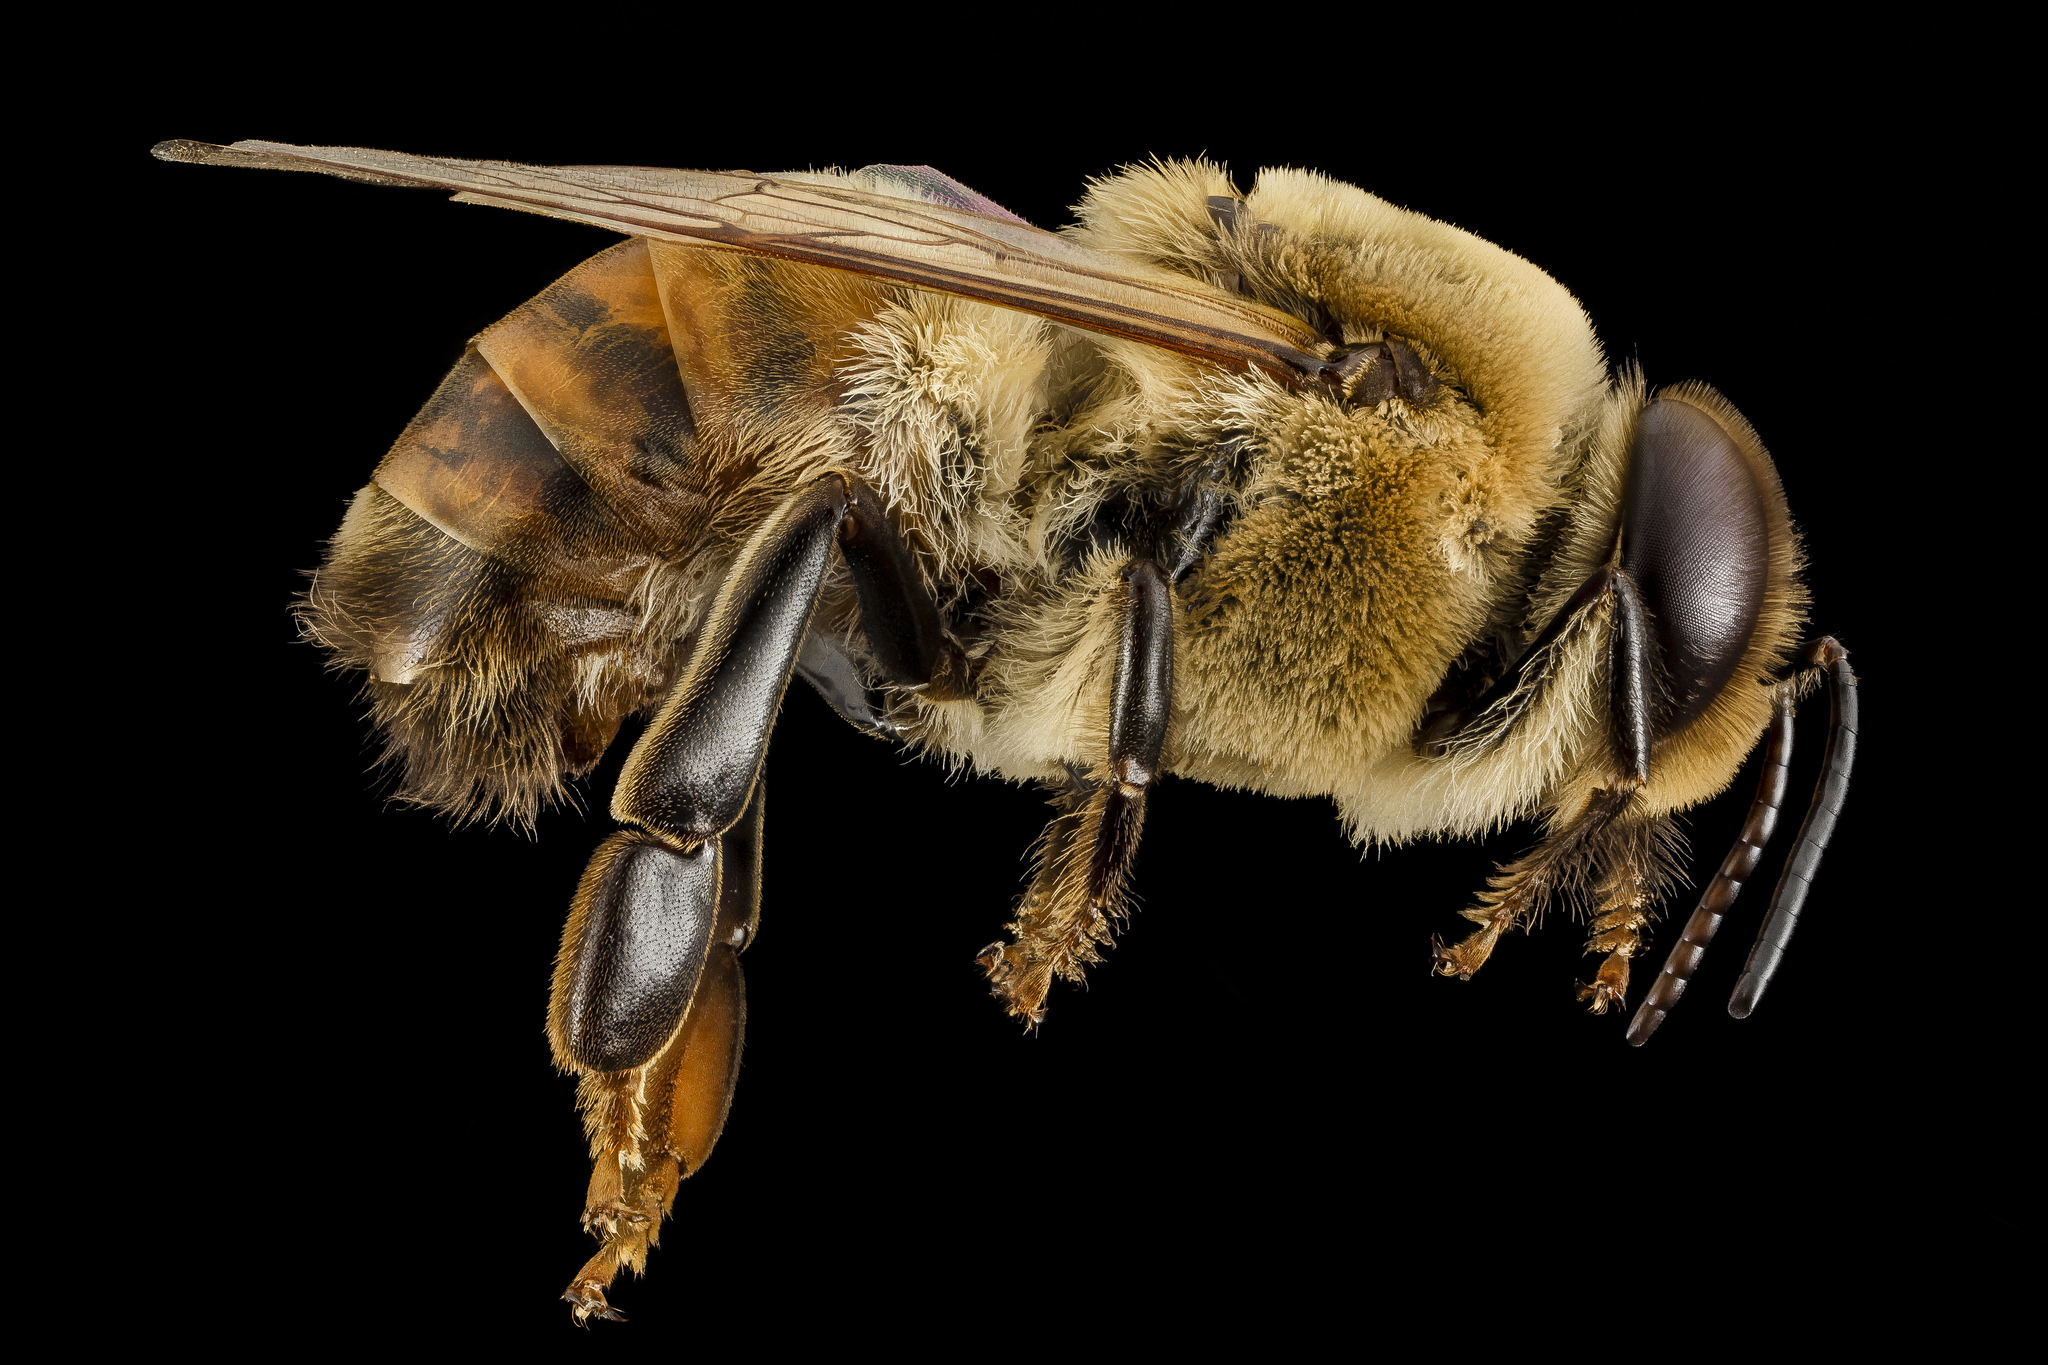 File:Honey bee (Apis mellifera).jpg - Wikimedia Commons